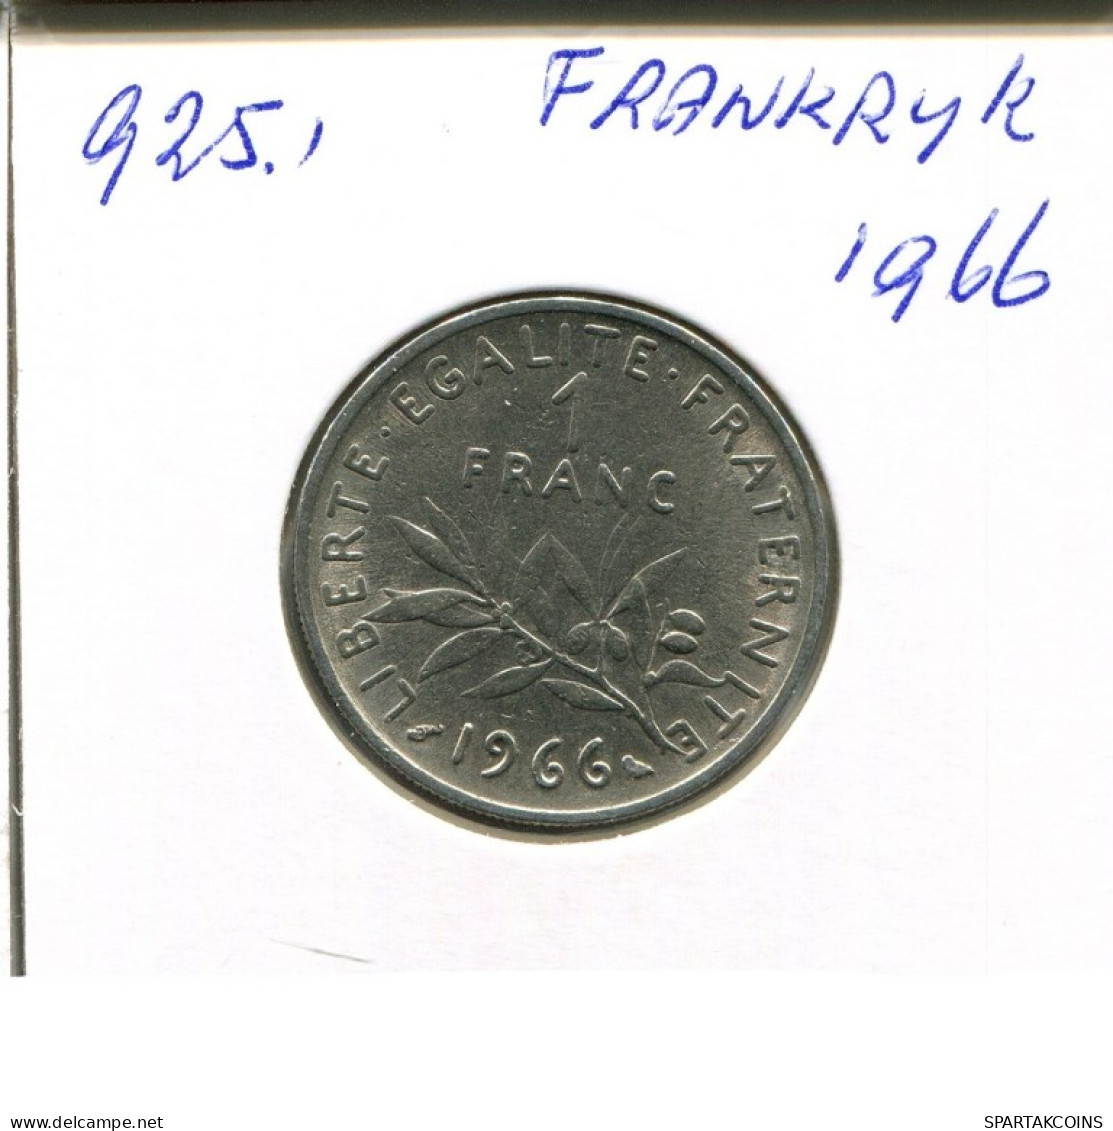 1 FRANC 1966 FRANCE Coin French Coin #AN308.U.A - 1 Franc